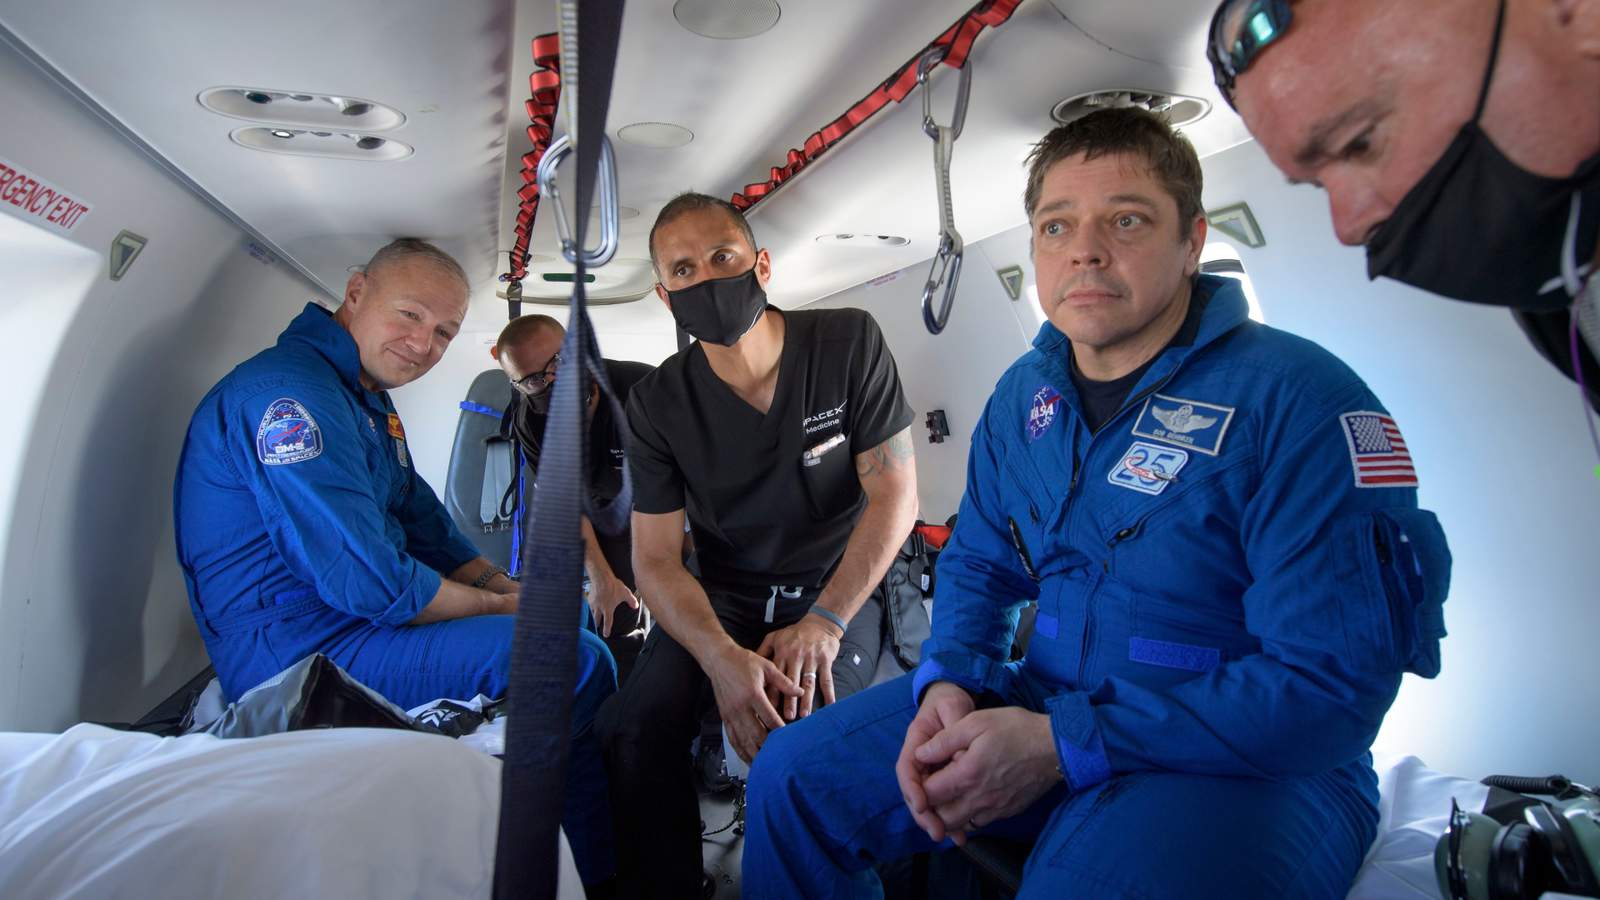 ‘It came alive:’ NASA astronauts describe experiencing splashdown in SpaceX Dragon